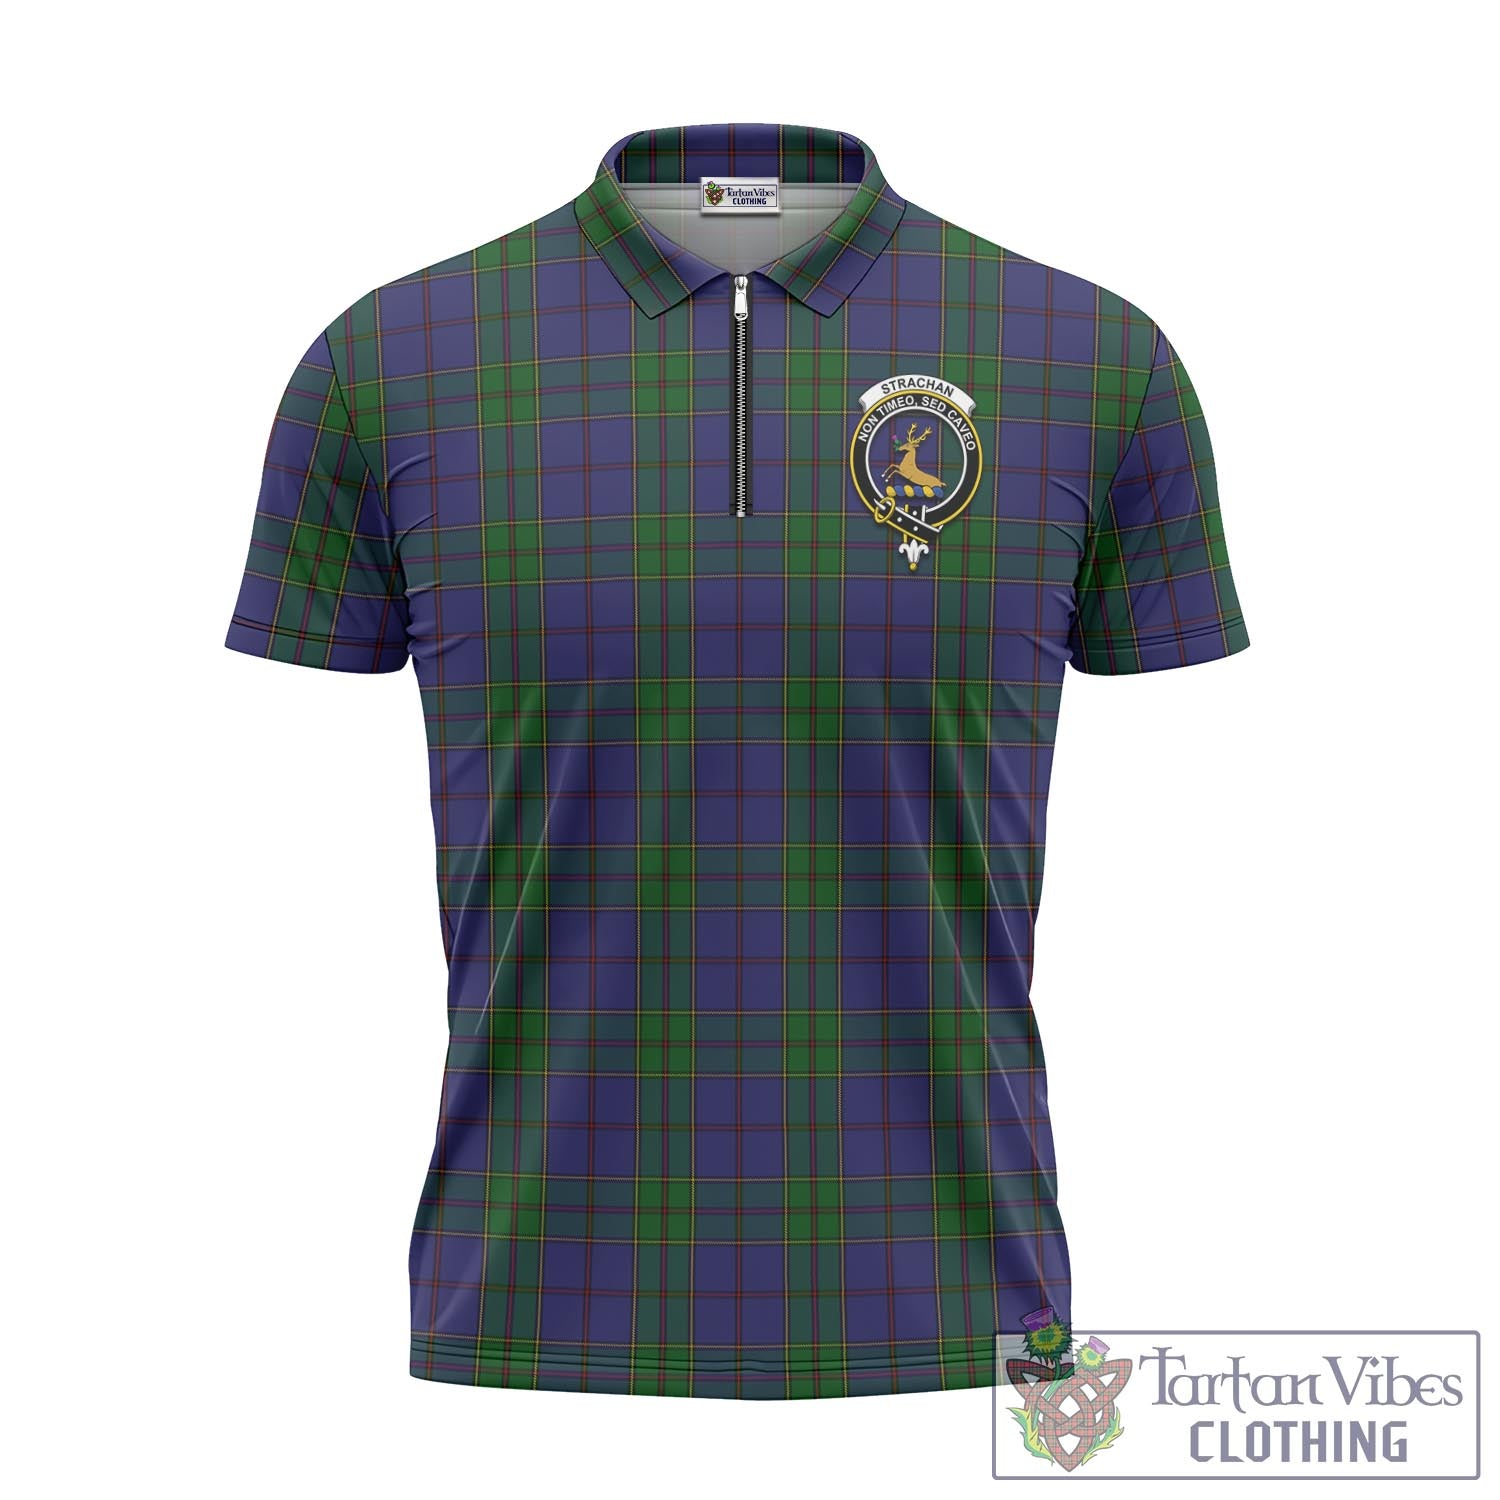 Tartan Vibes Clothing Strachan Tartan Zipper Polo Shirt with Family Crest